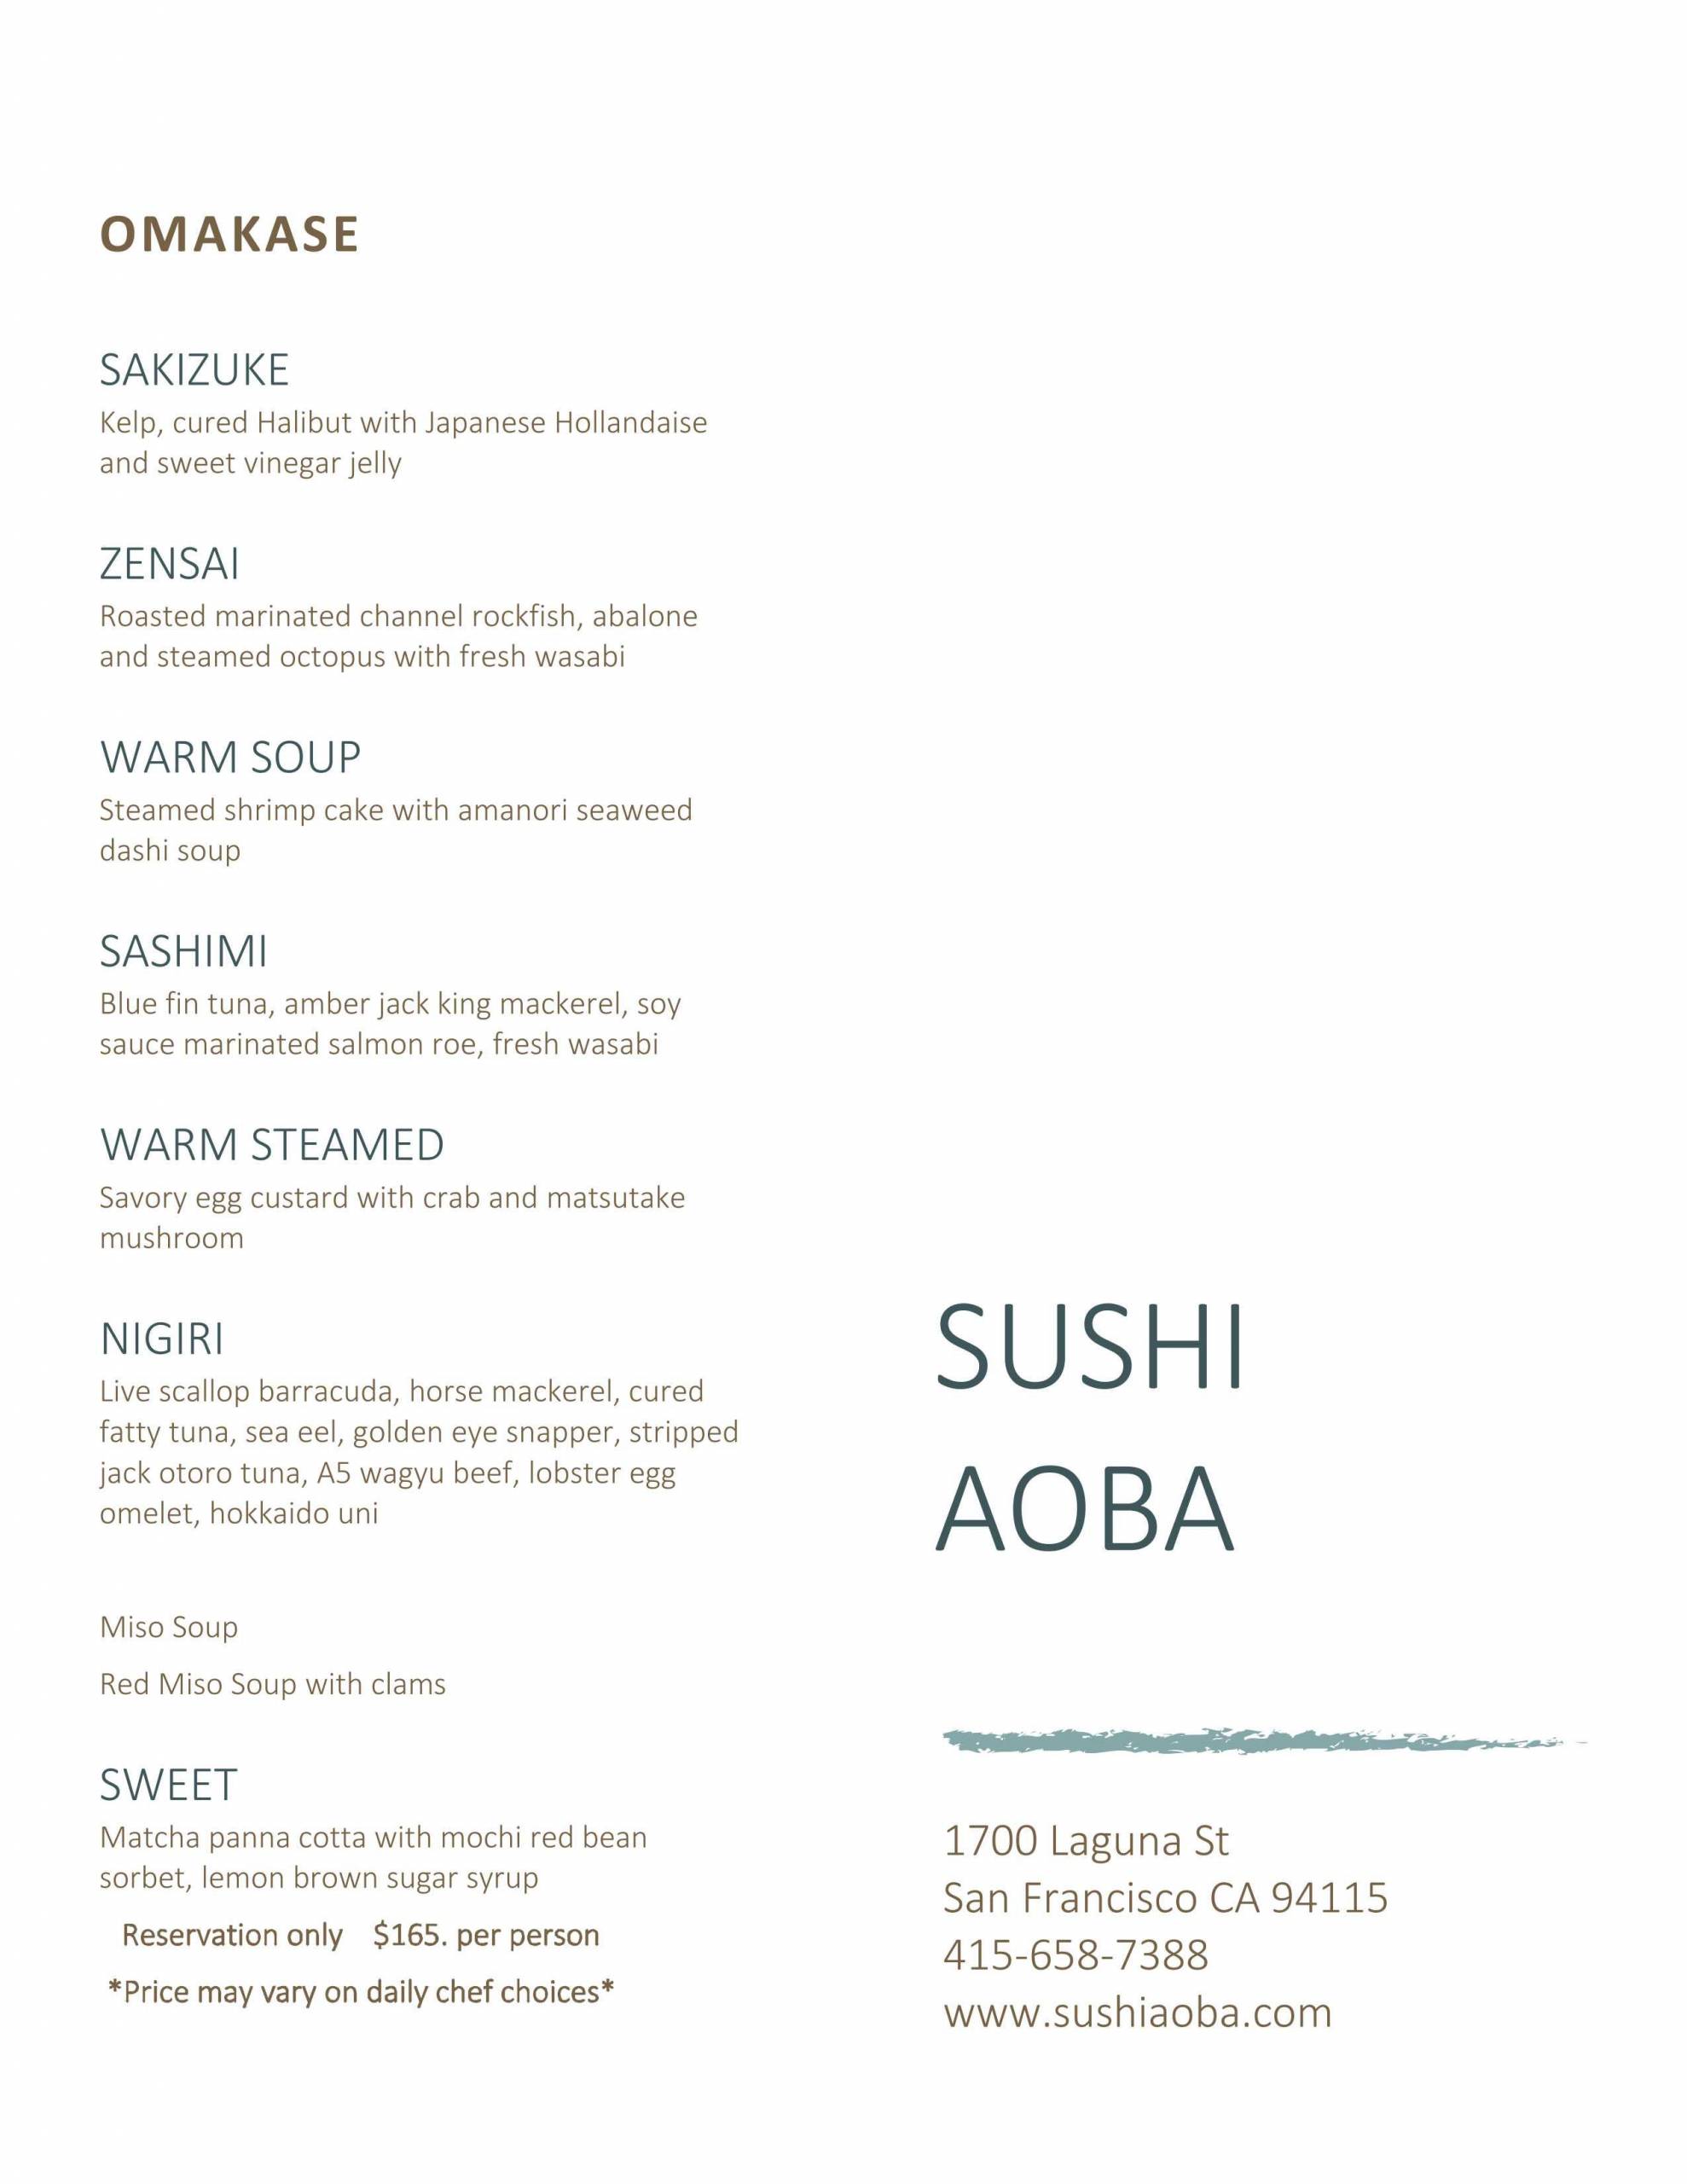 The menu for Sushi Aoba.